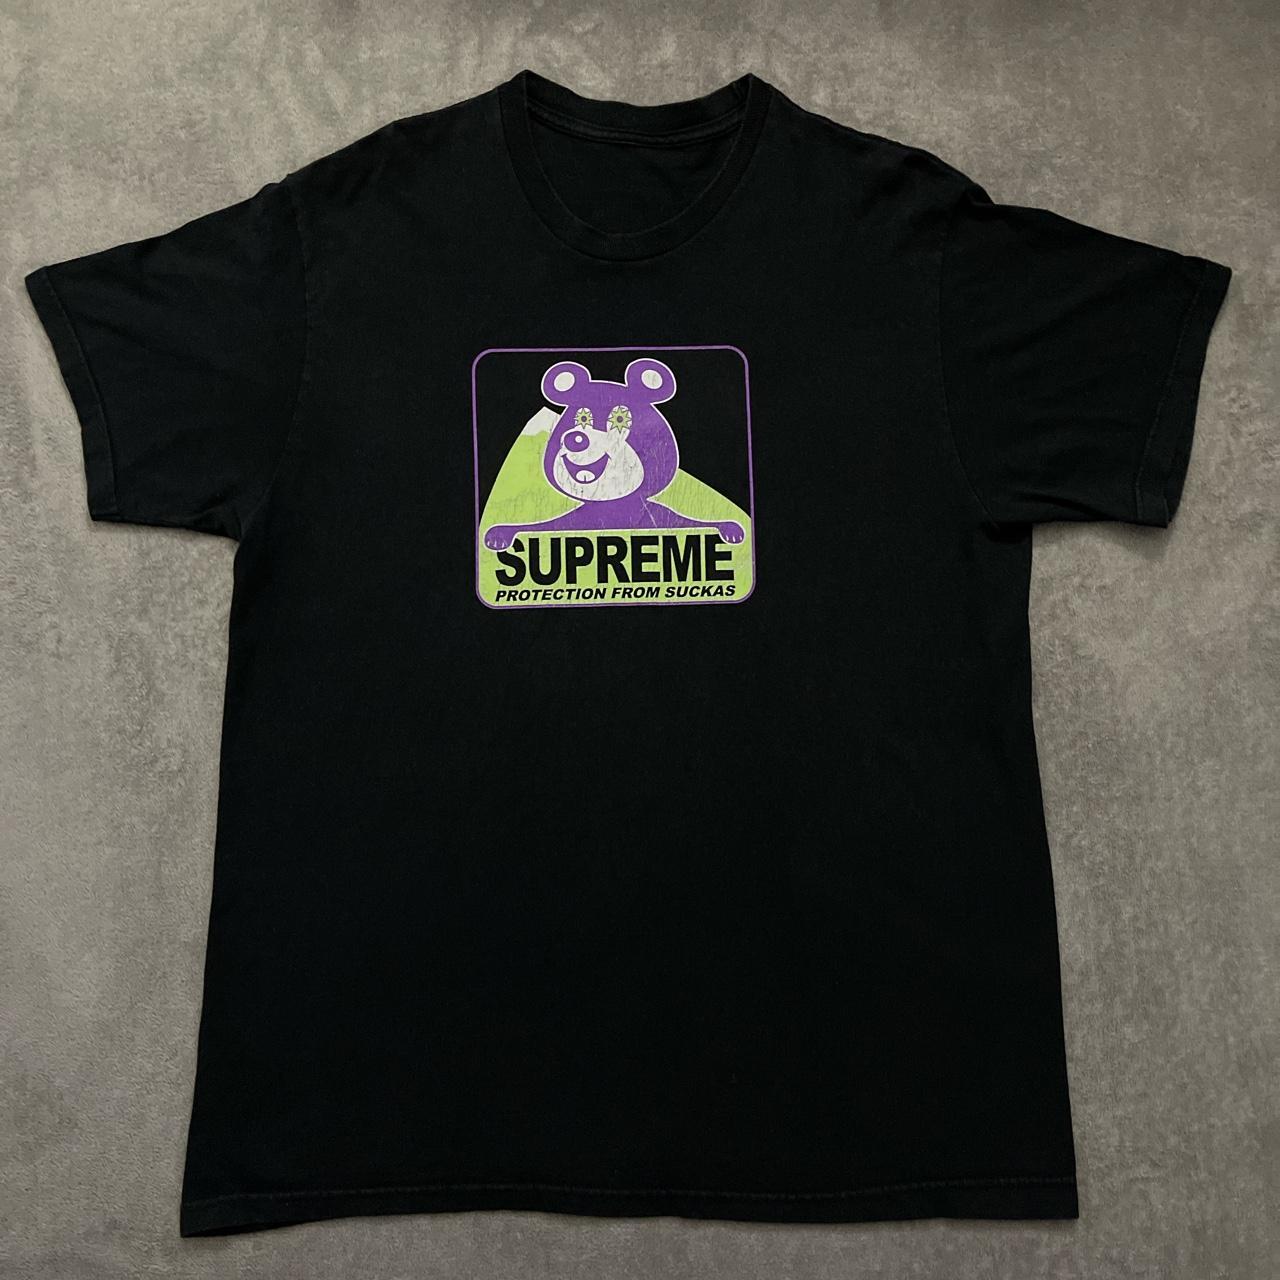 Supreme FW20 “Bear” Tee Purchased In 2020. Kept In... - Depop